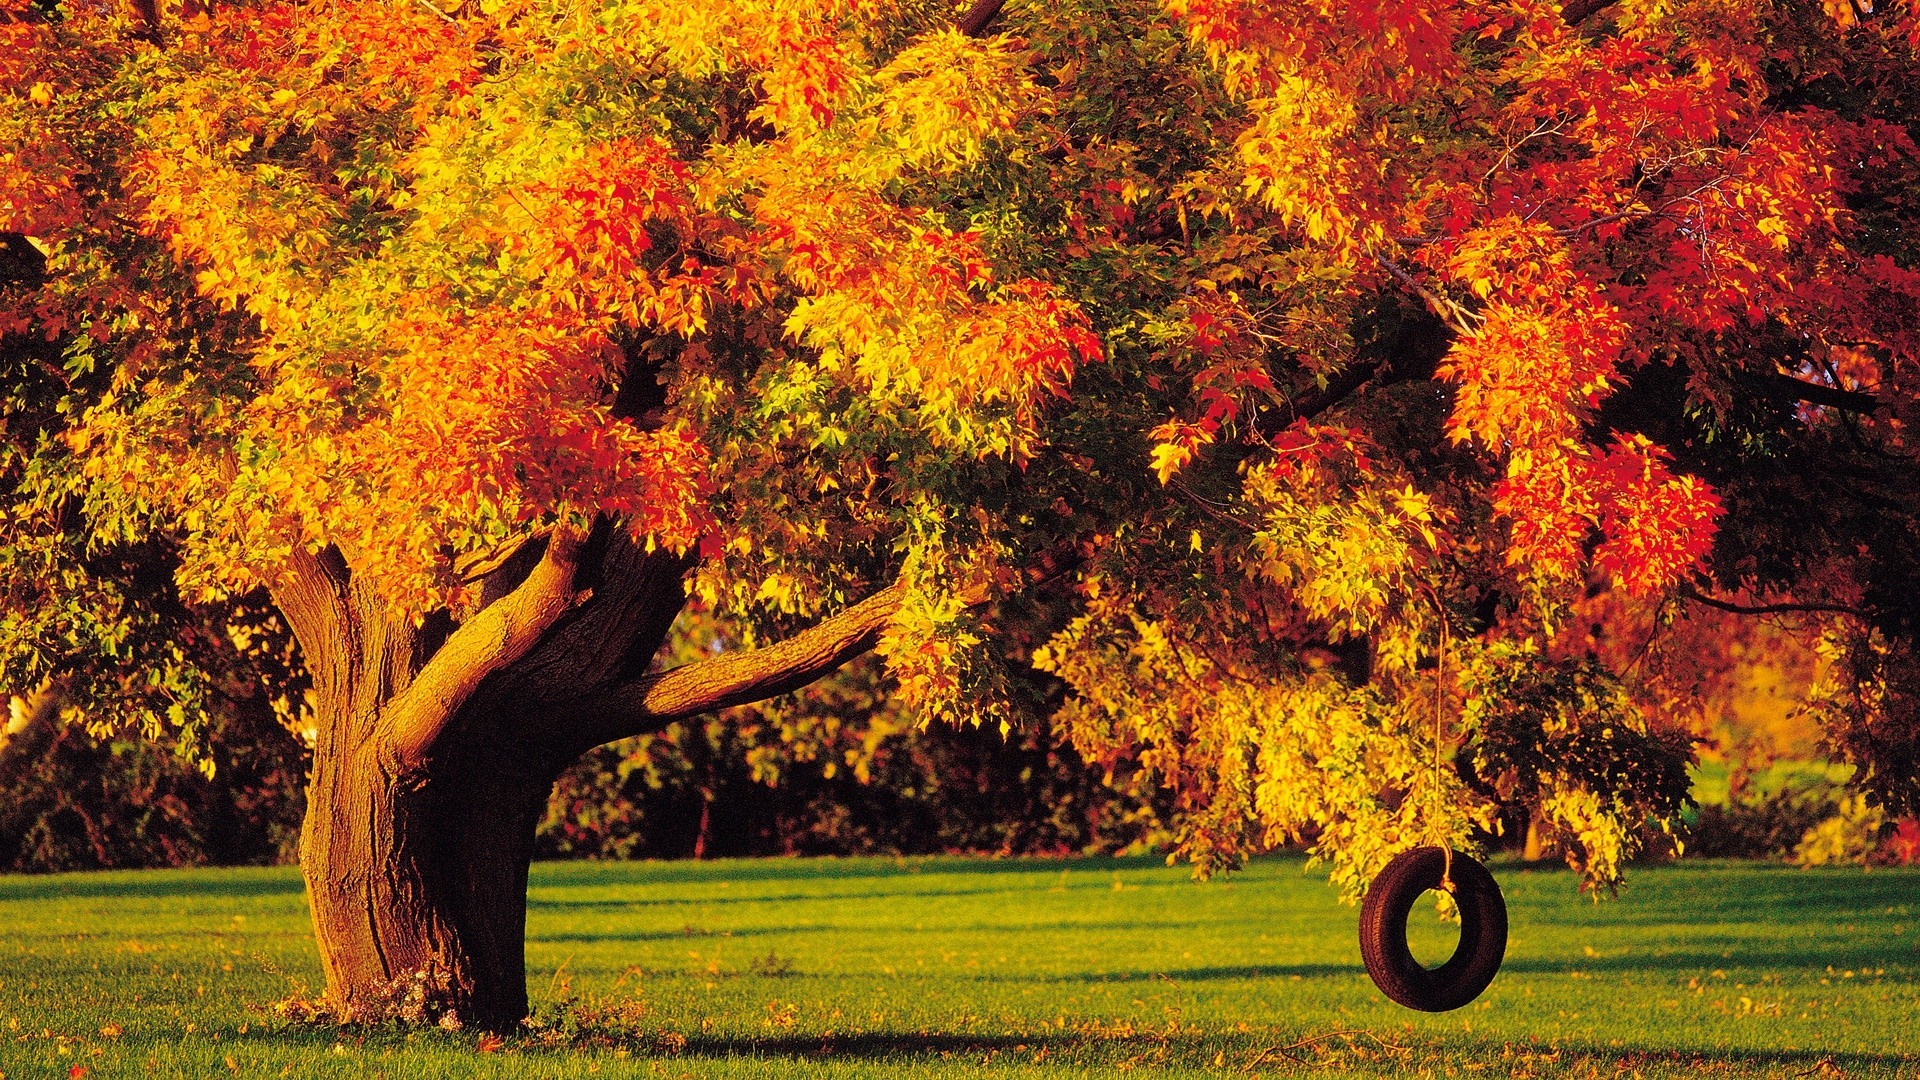 autumn fall tree leaf season maple nature park color landscape wood outdoors bright